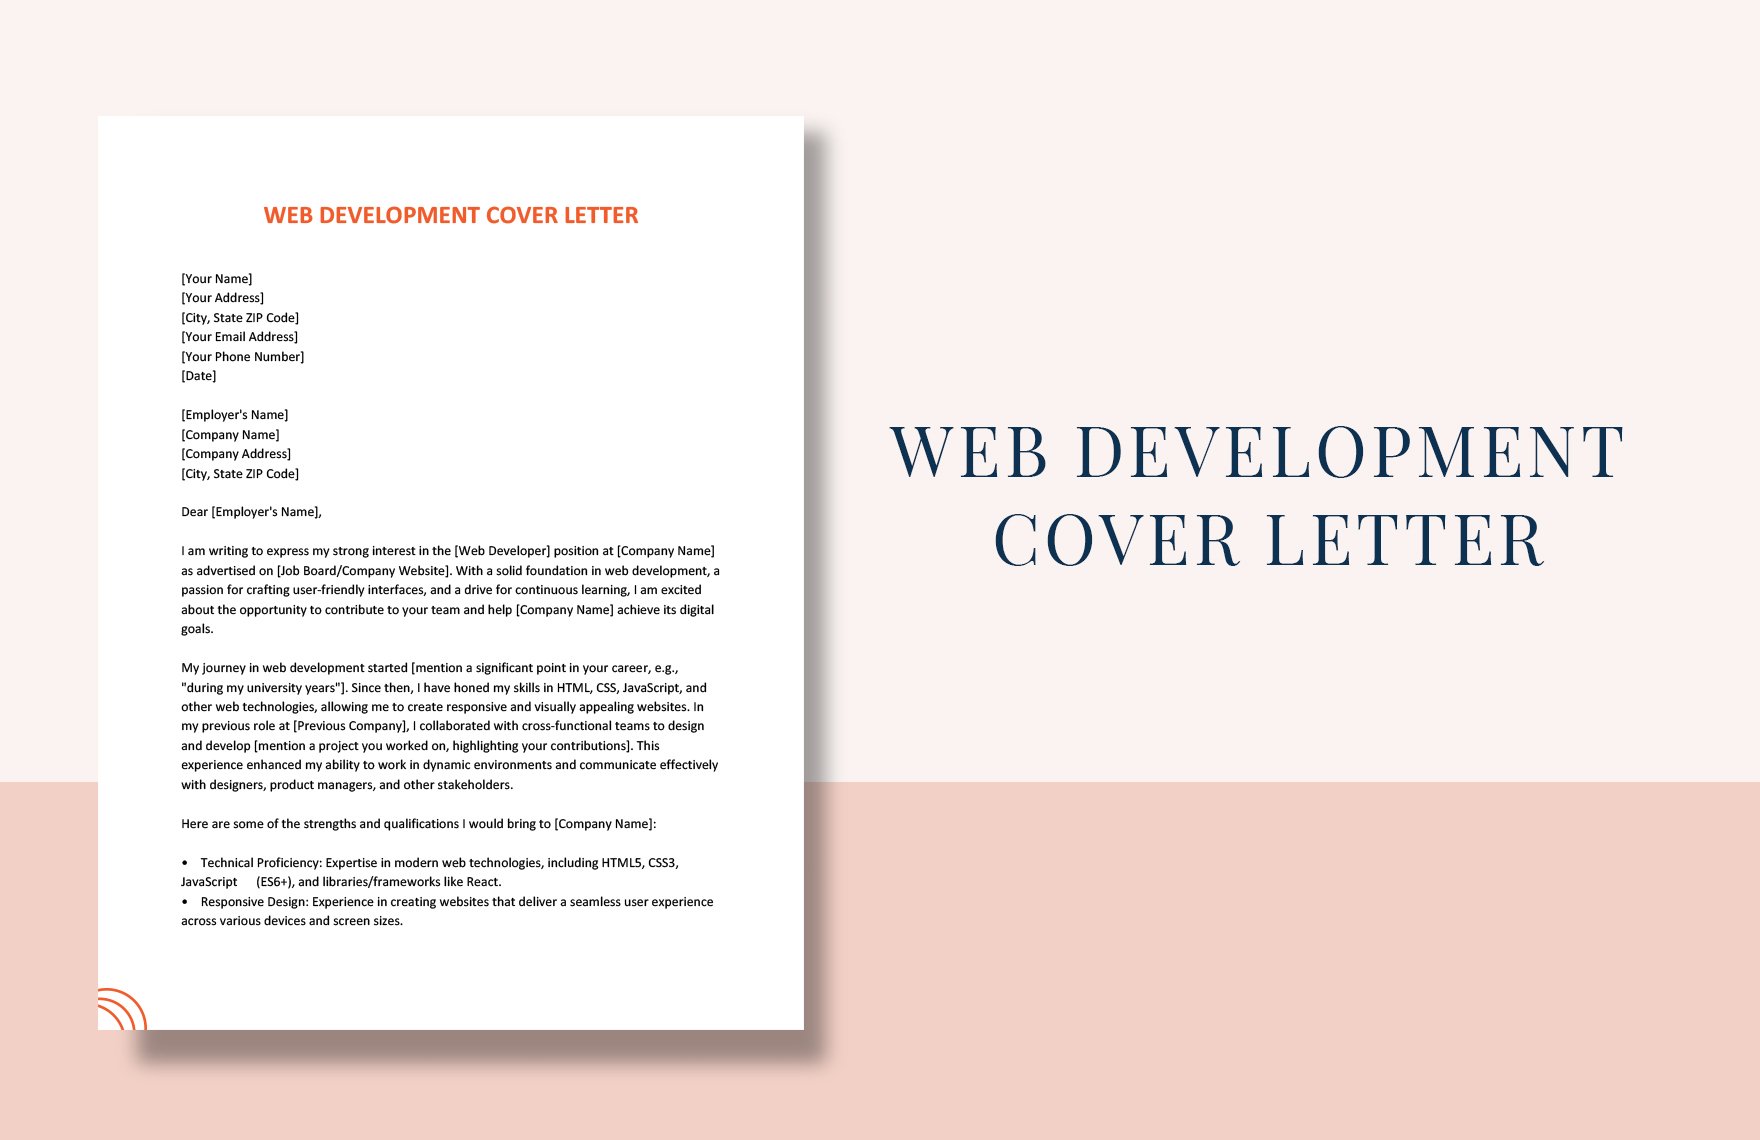 Web Development Cover Letter in Word, Google Docs